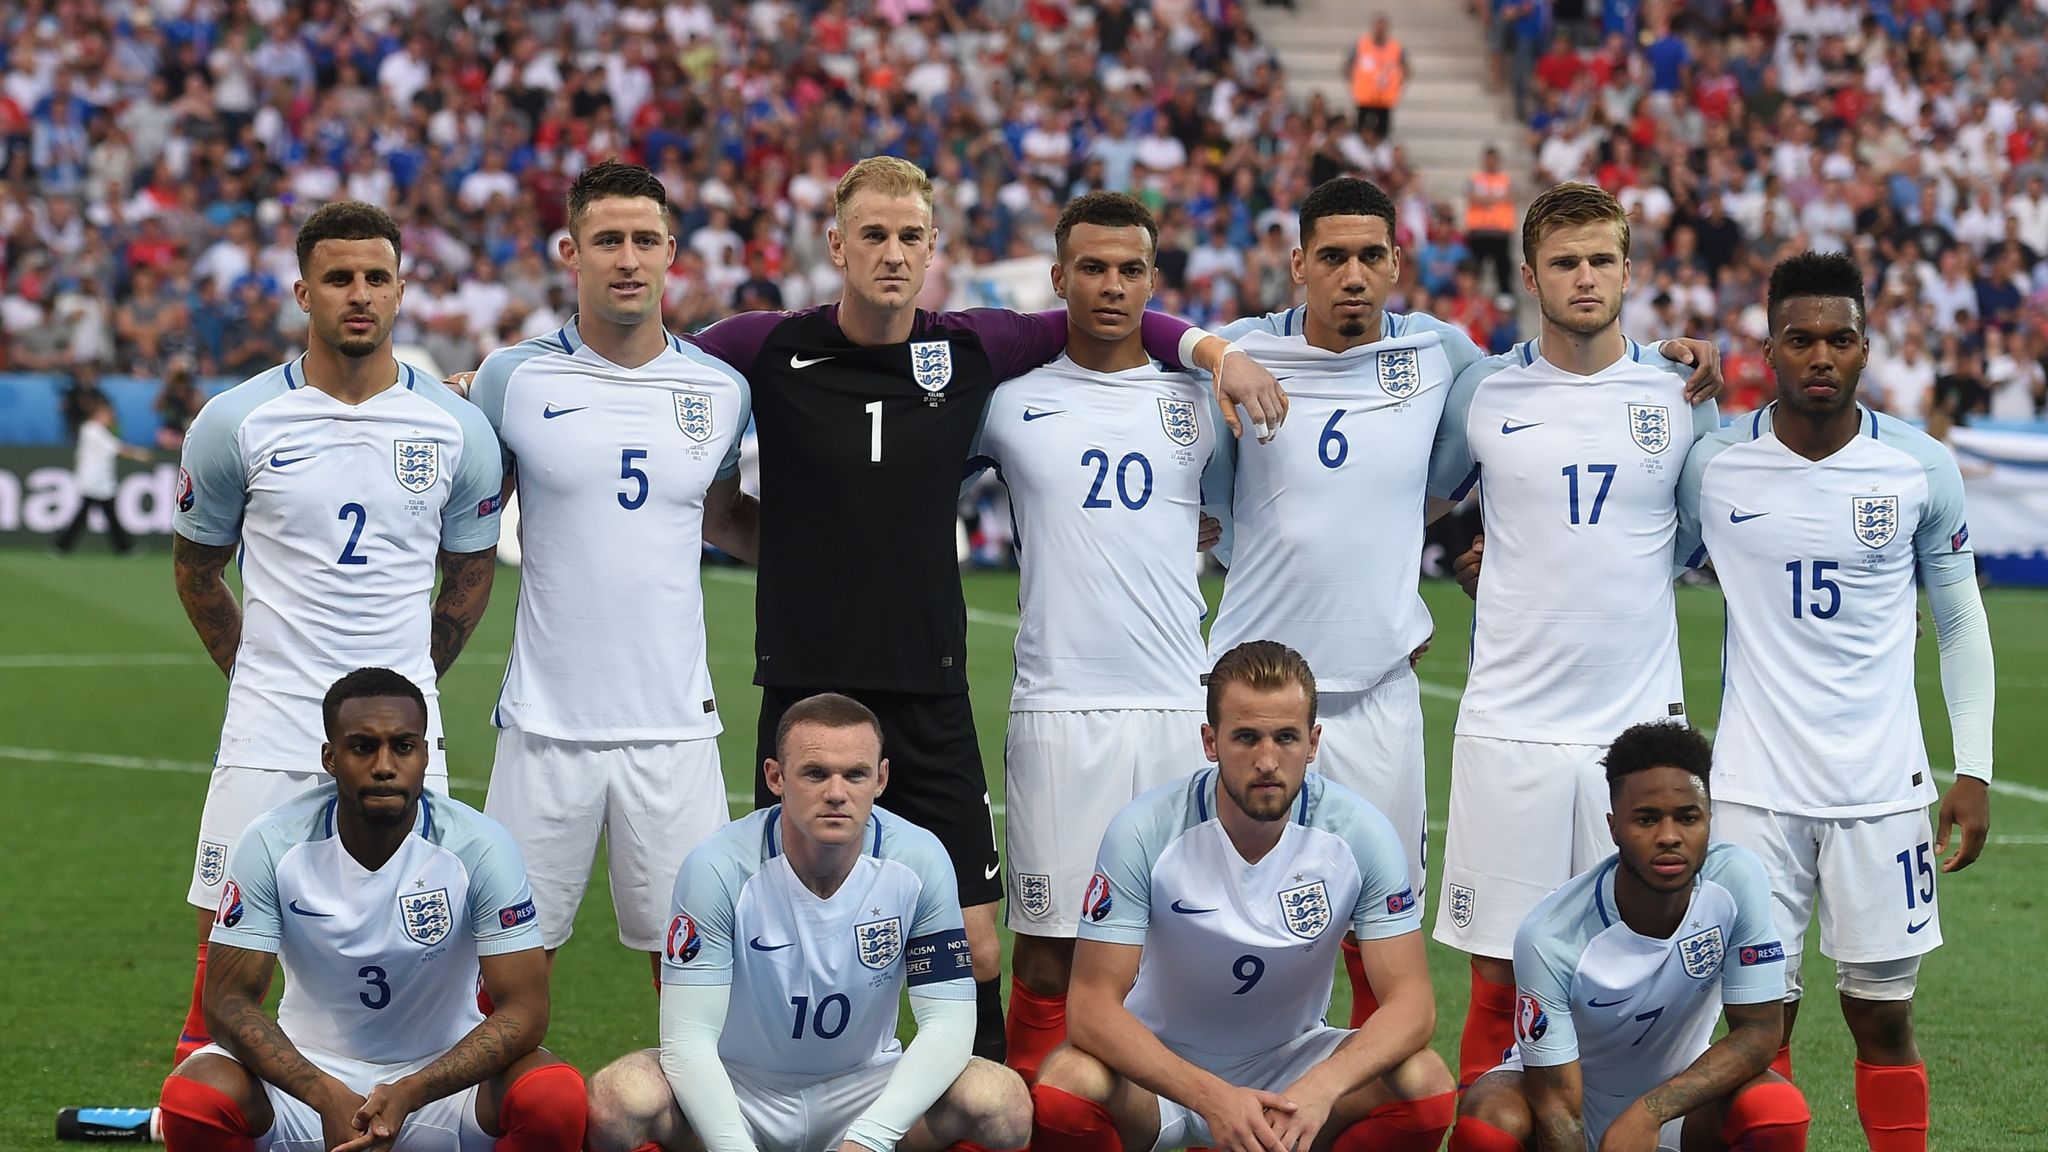 England vs iceland euro 2016